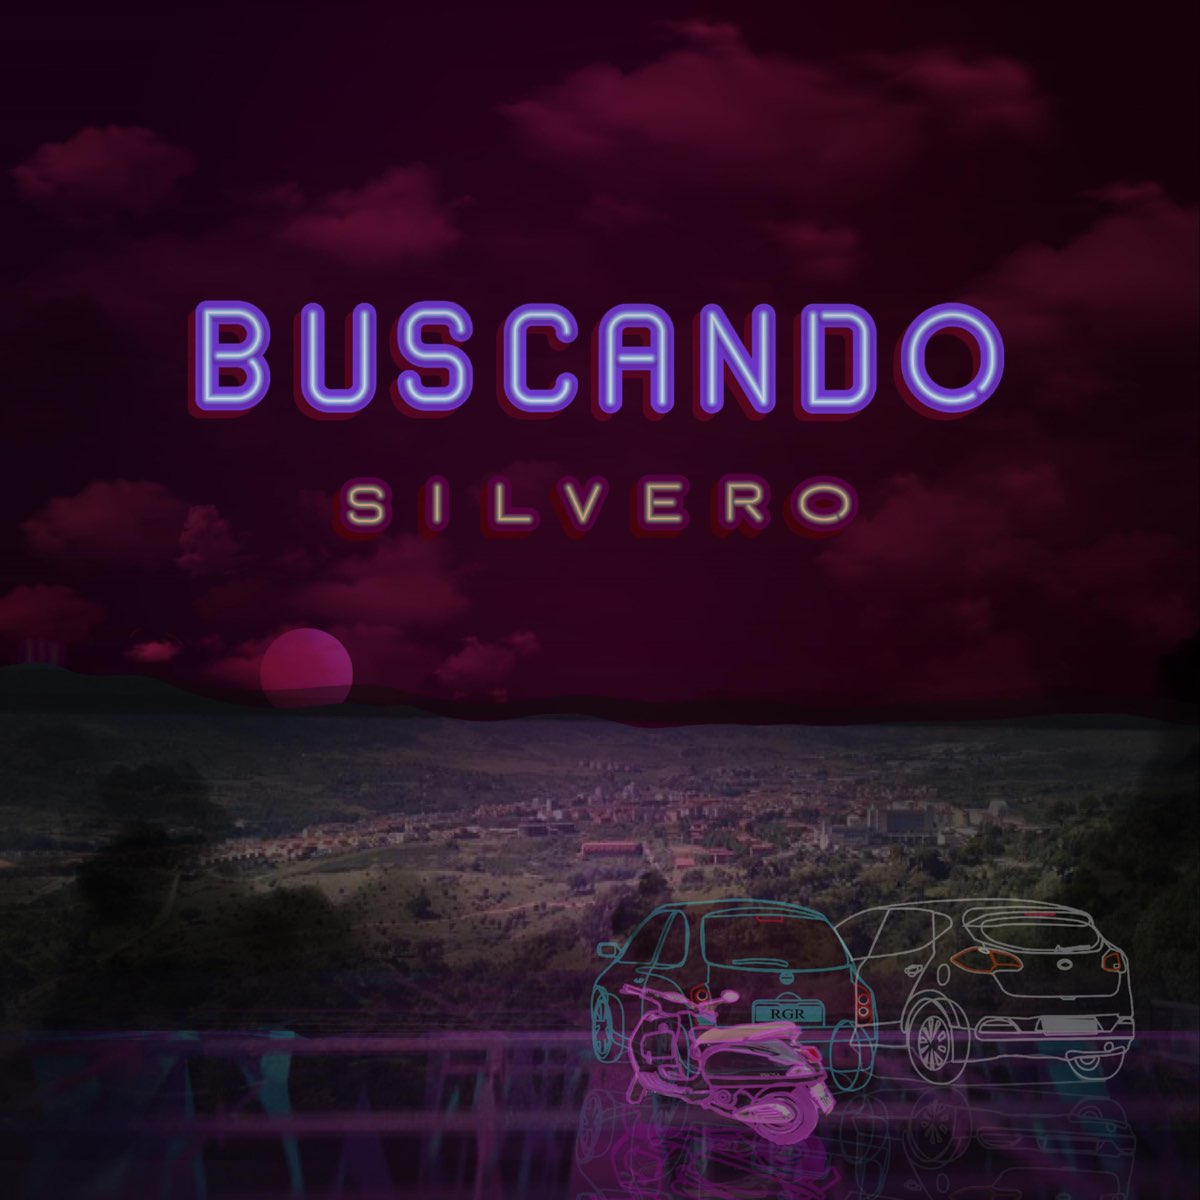 Buscando - Single by Silvero on Apple Music